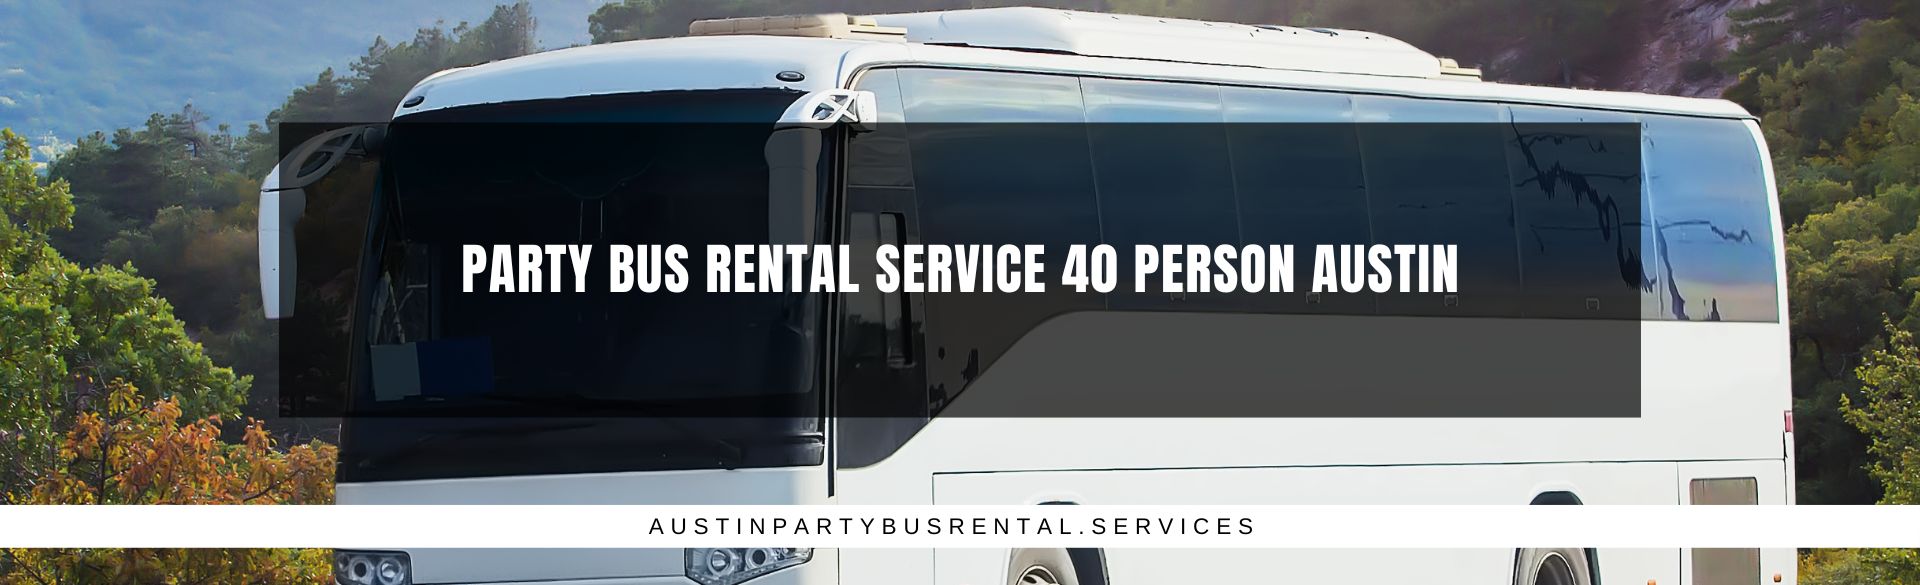 Party Bus Rental Service 40 Person Austin